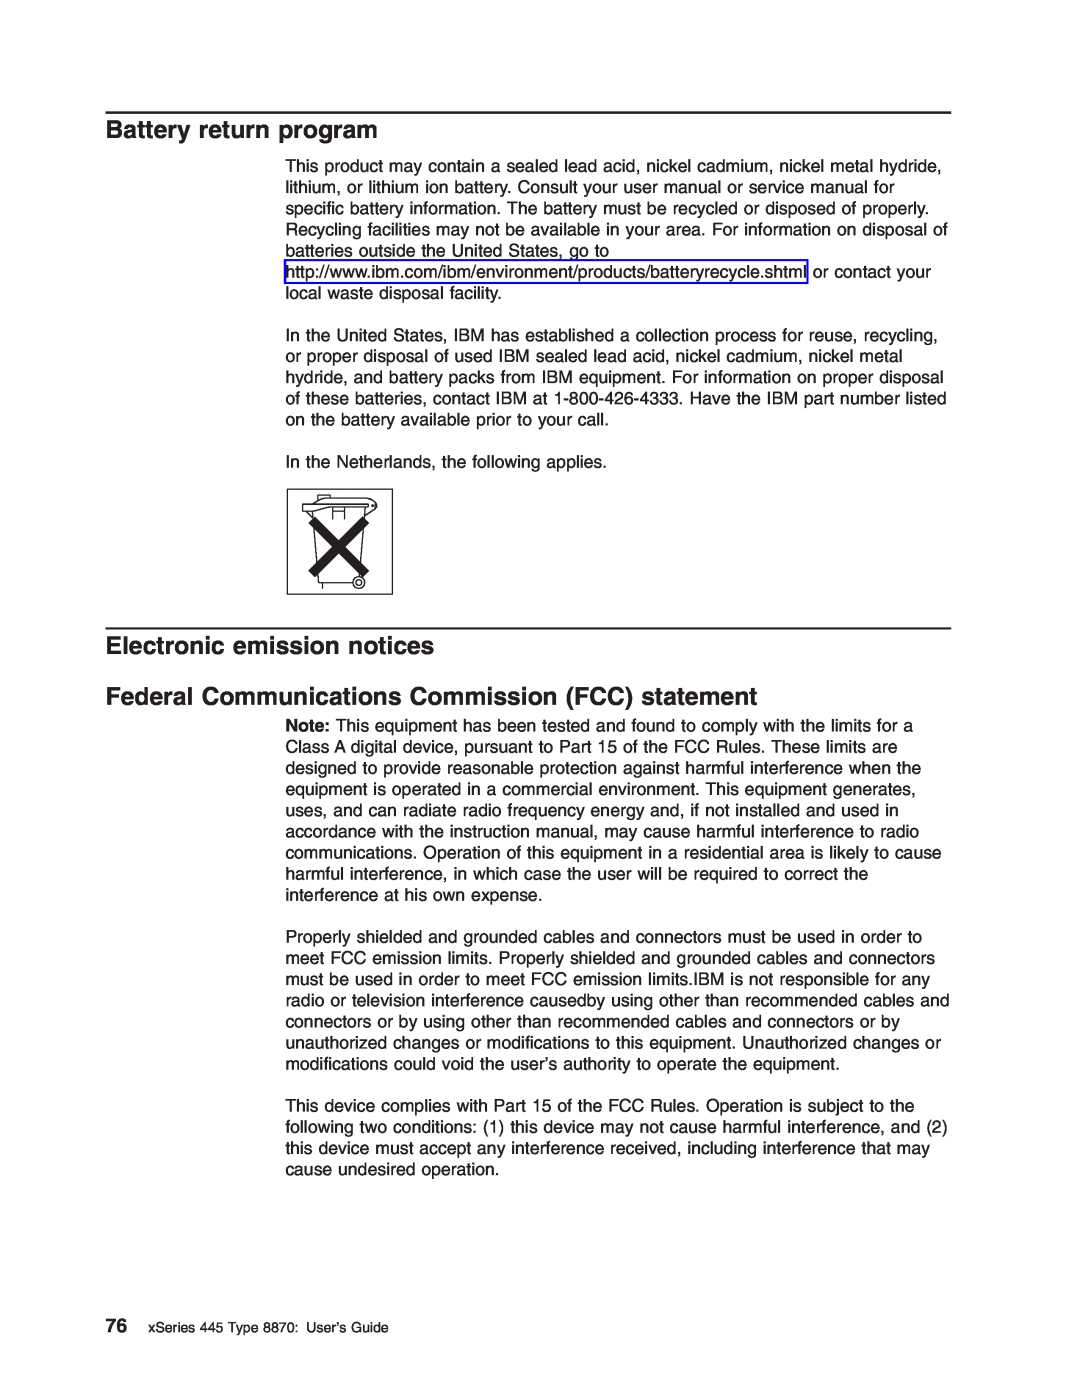 IBM 8870 manual Battery return program, Electronic emission notices, Federal Communications Commission FCC statement 